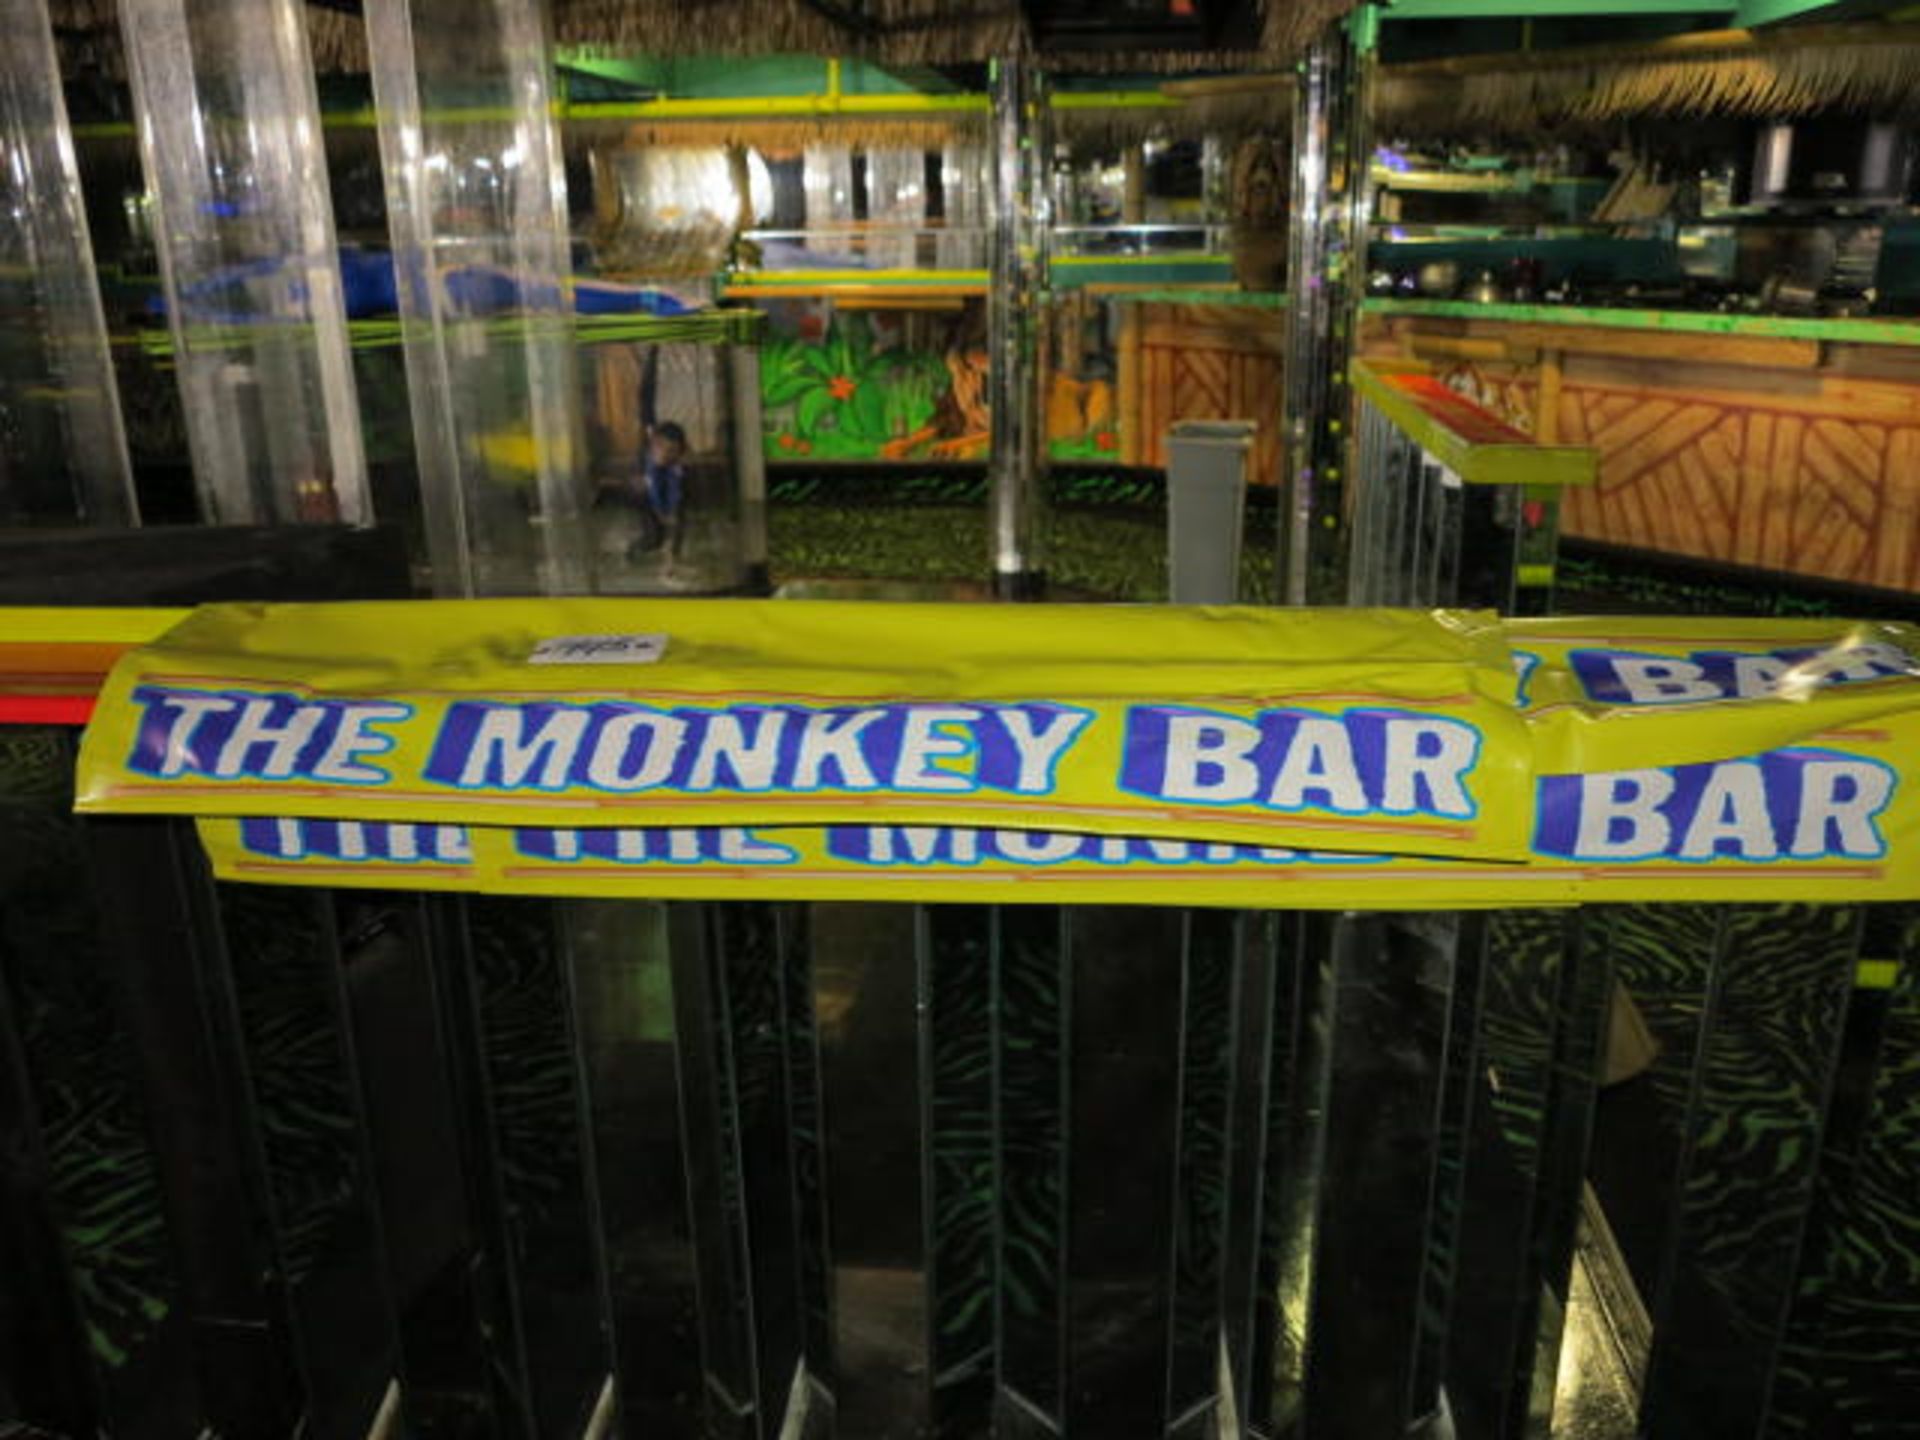 Lot Monkey Bar Banners